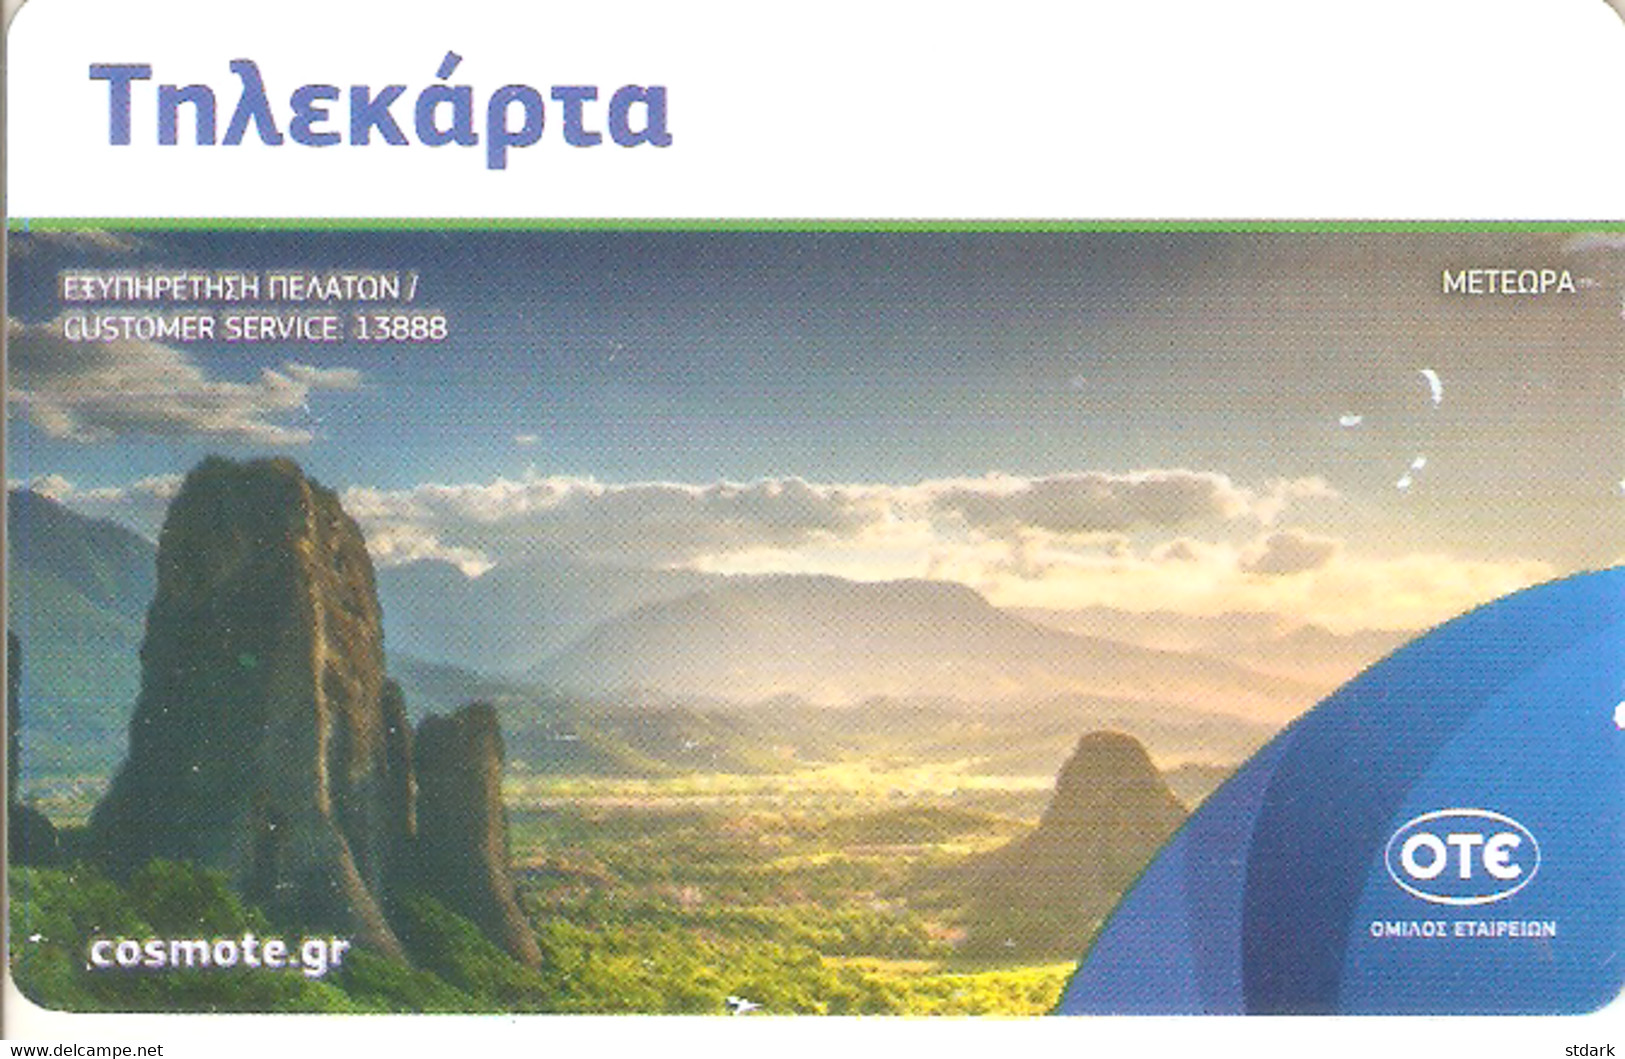 Meteora 10 Euro Tirage 40.000, 04/2022,used - Grèce